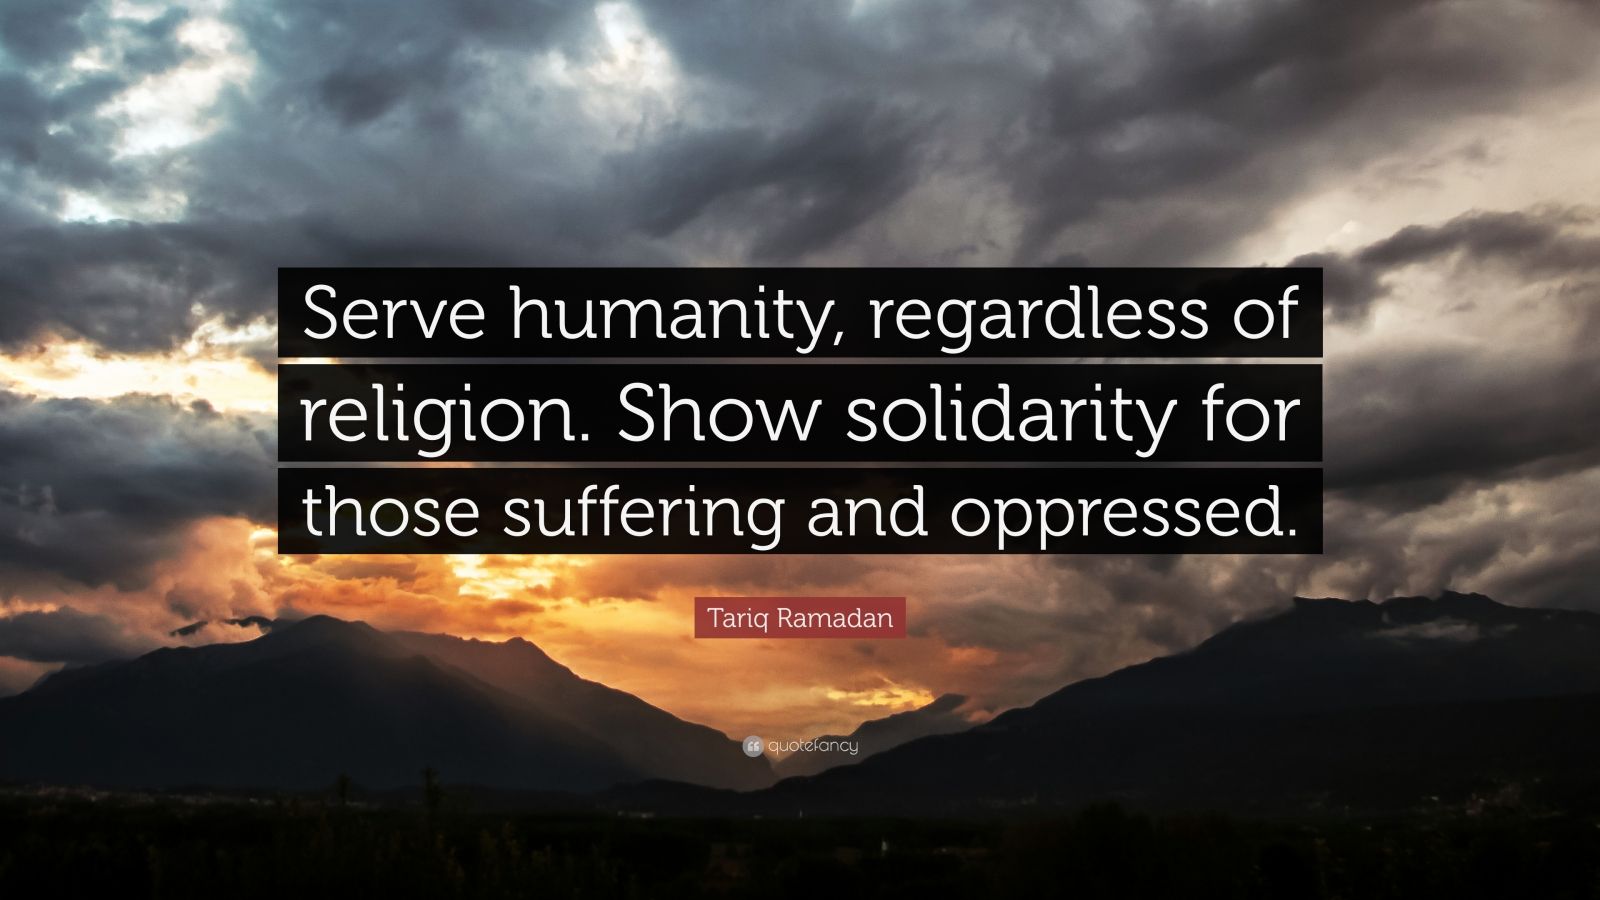 Tariq Ramadan Quote “Serve humanity, regardless of